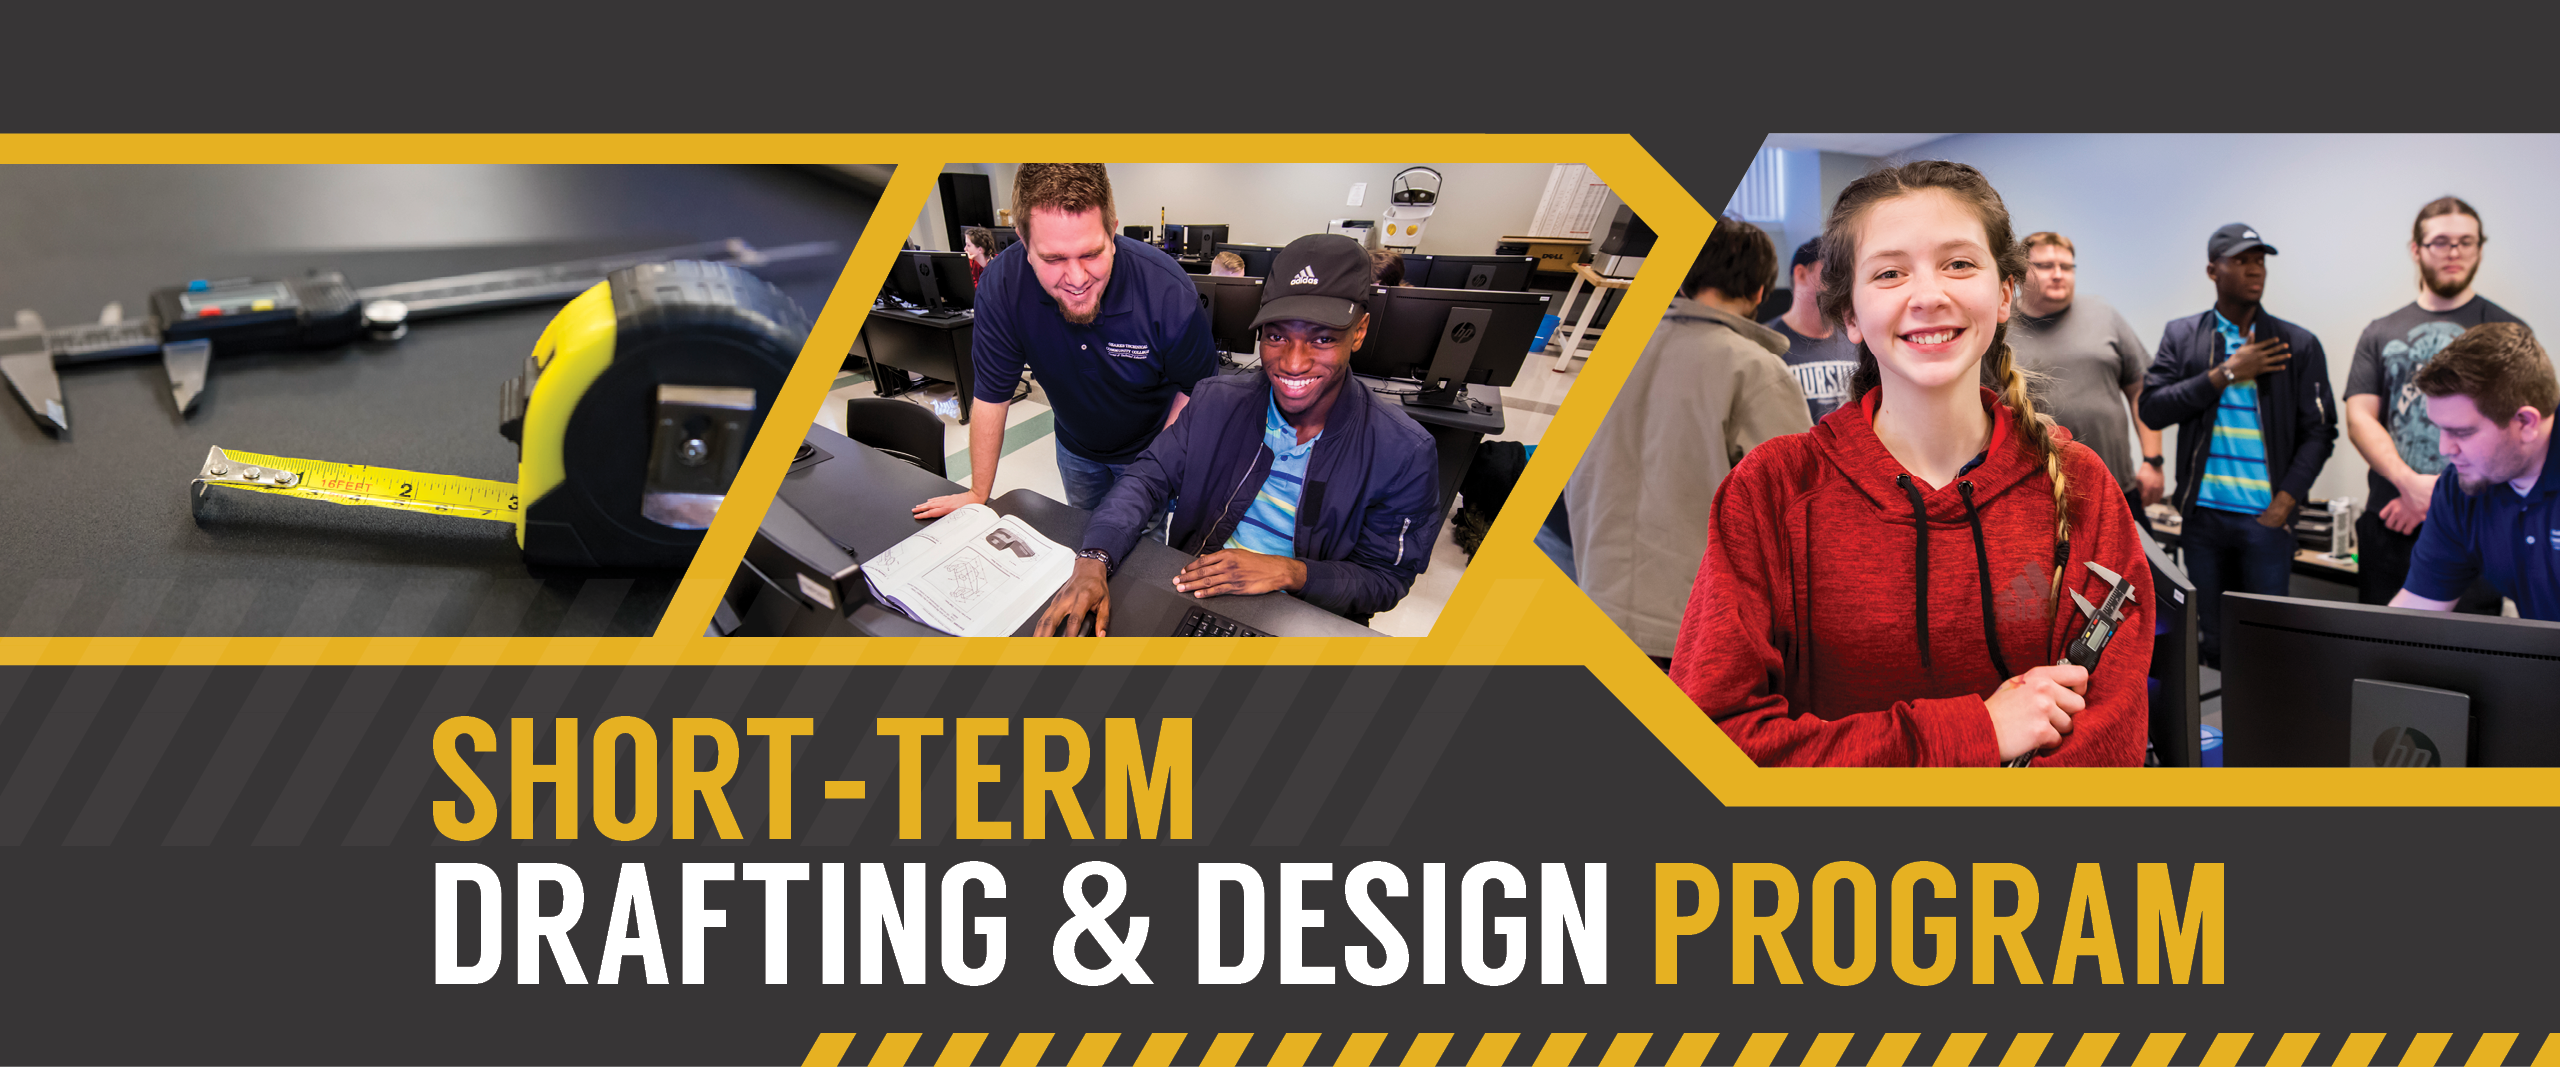 Drafting & Design Short-Term Programs